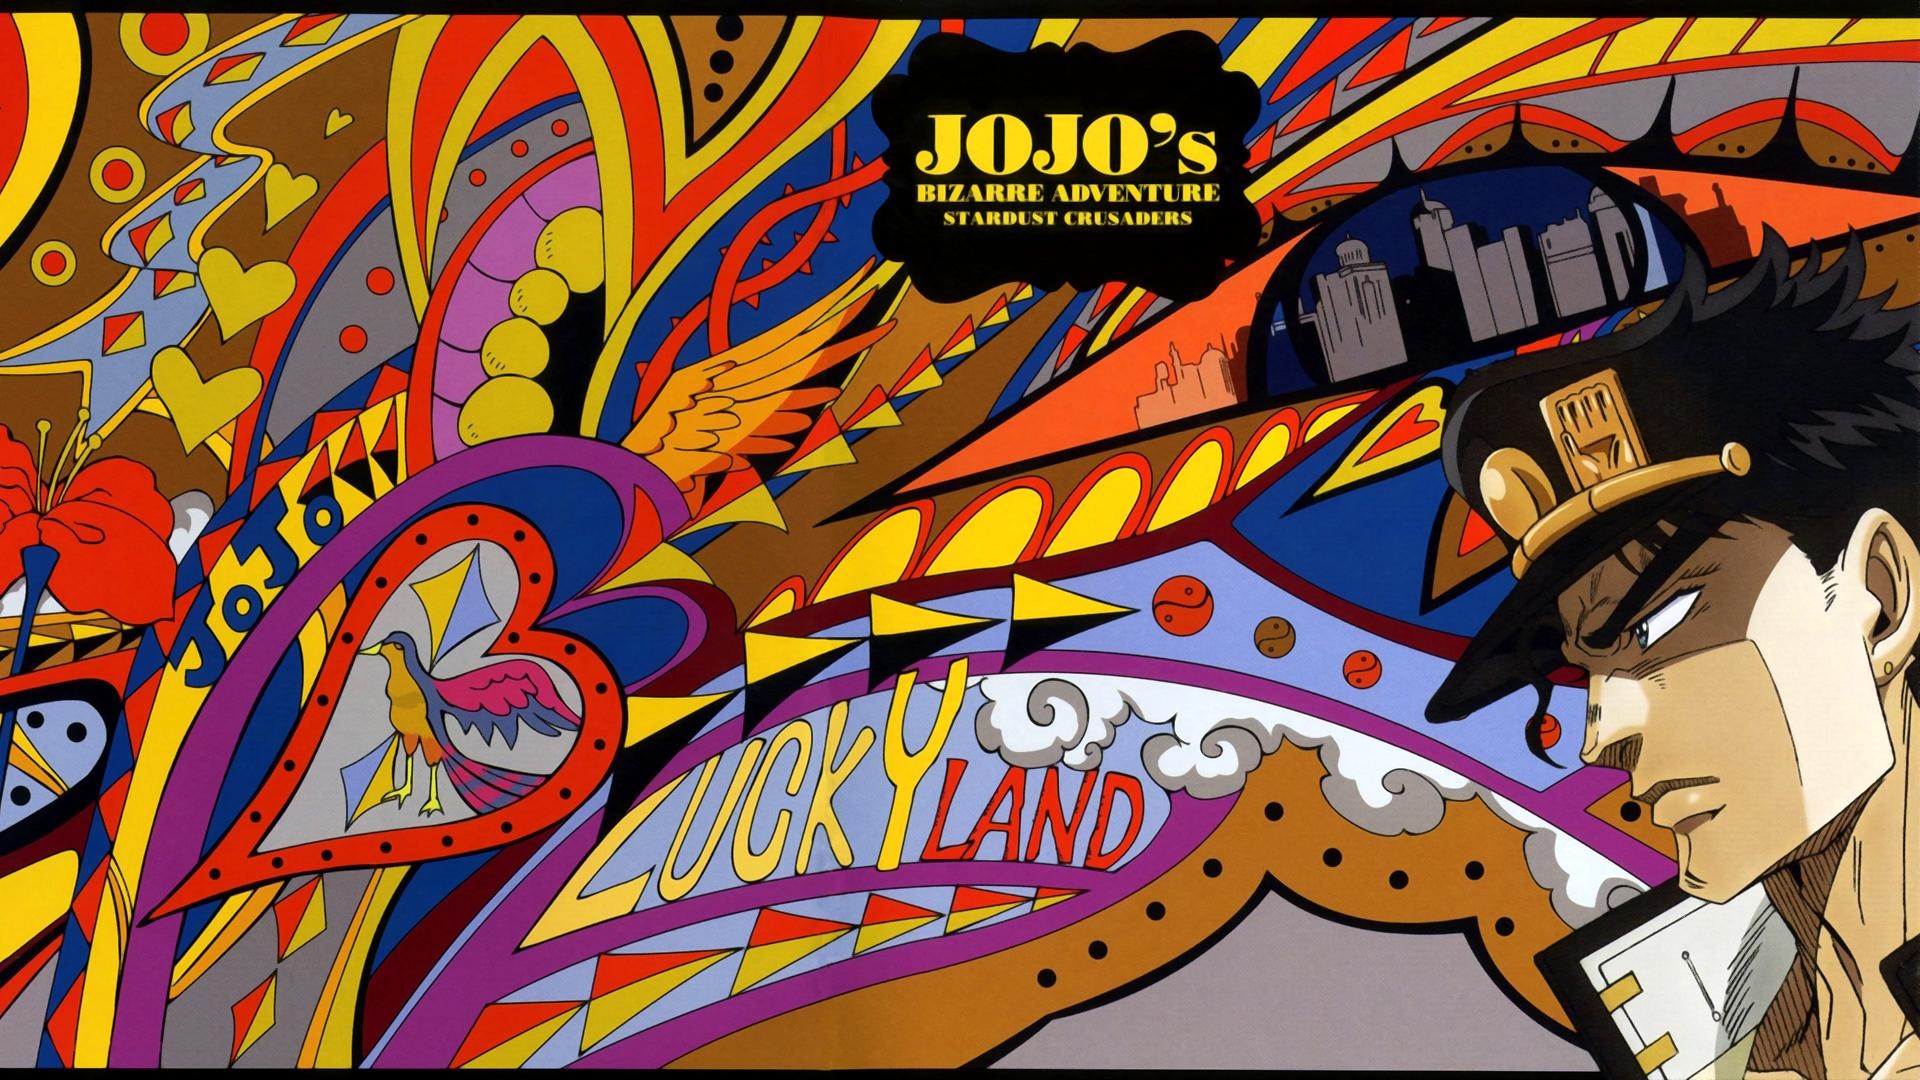 Jojo Bizarre Adventure wallpaper ·① Download free awesome full HD